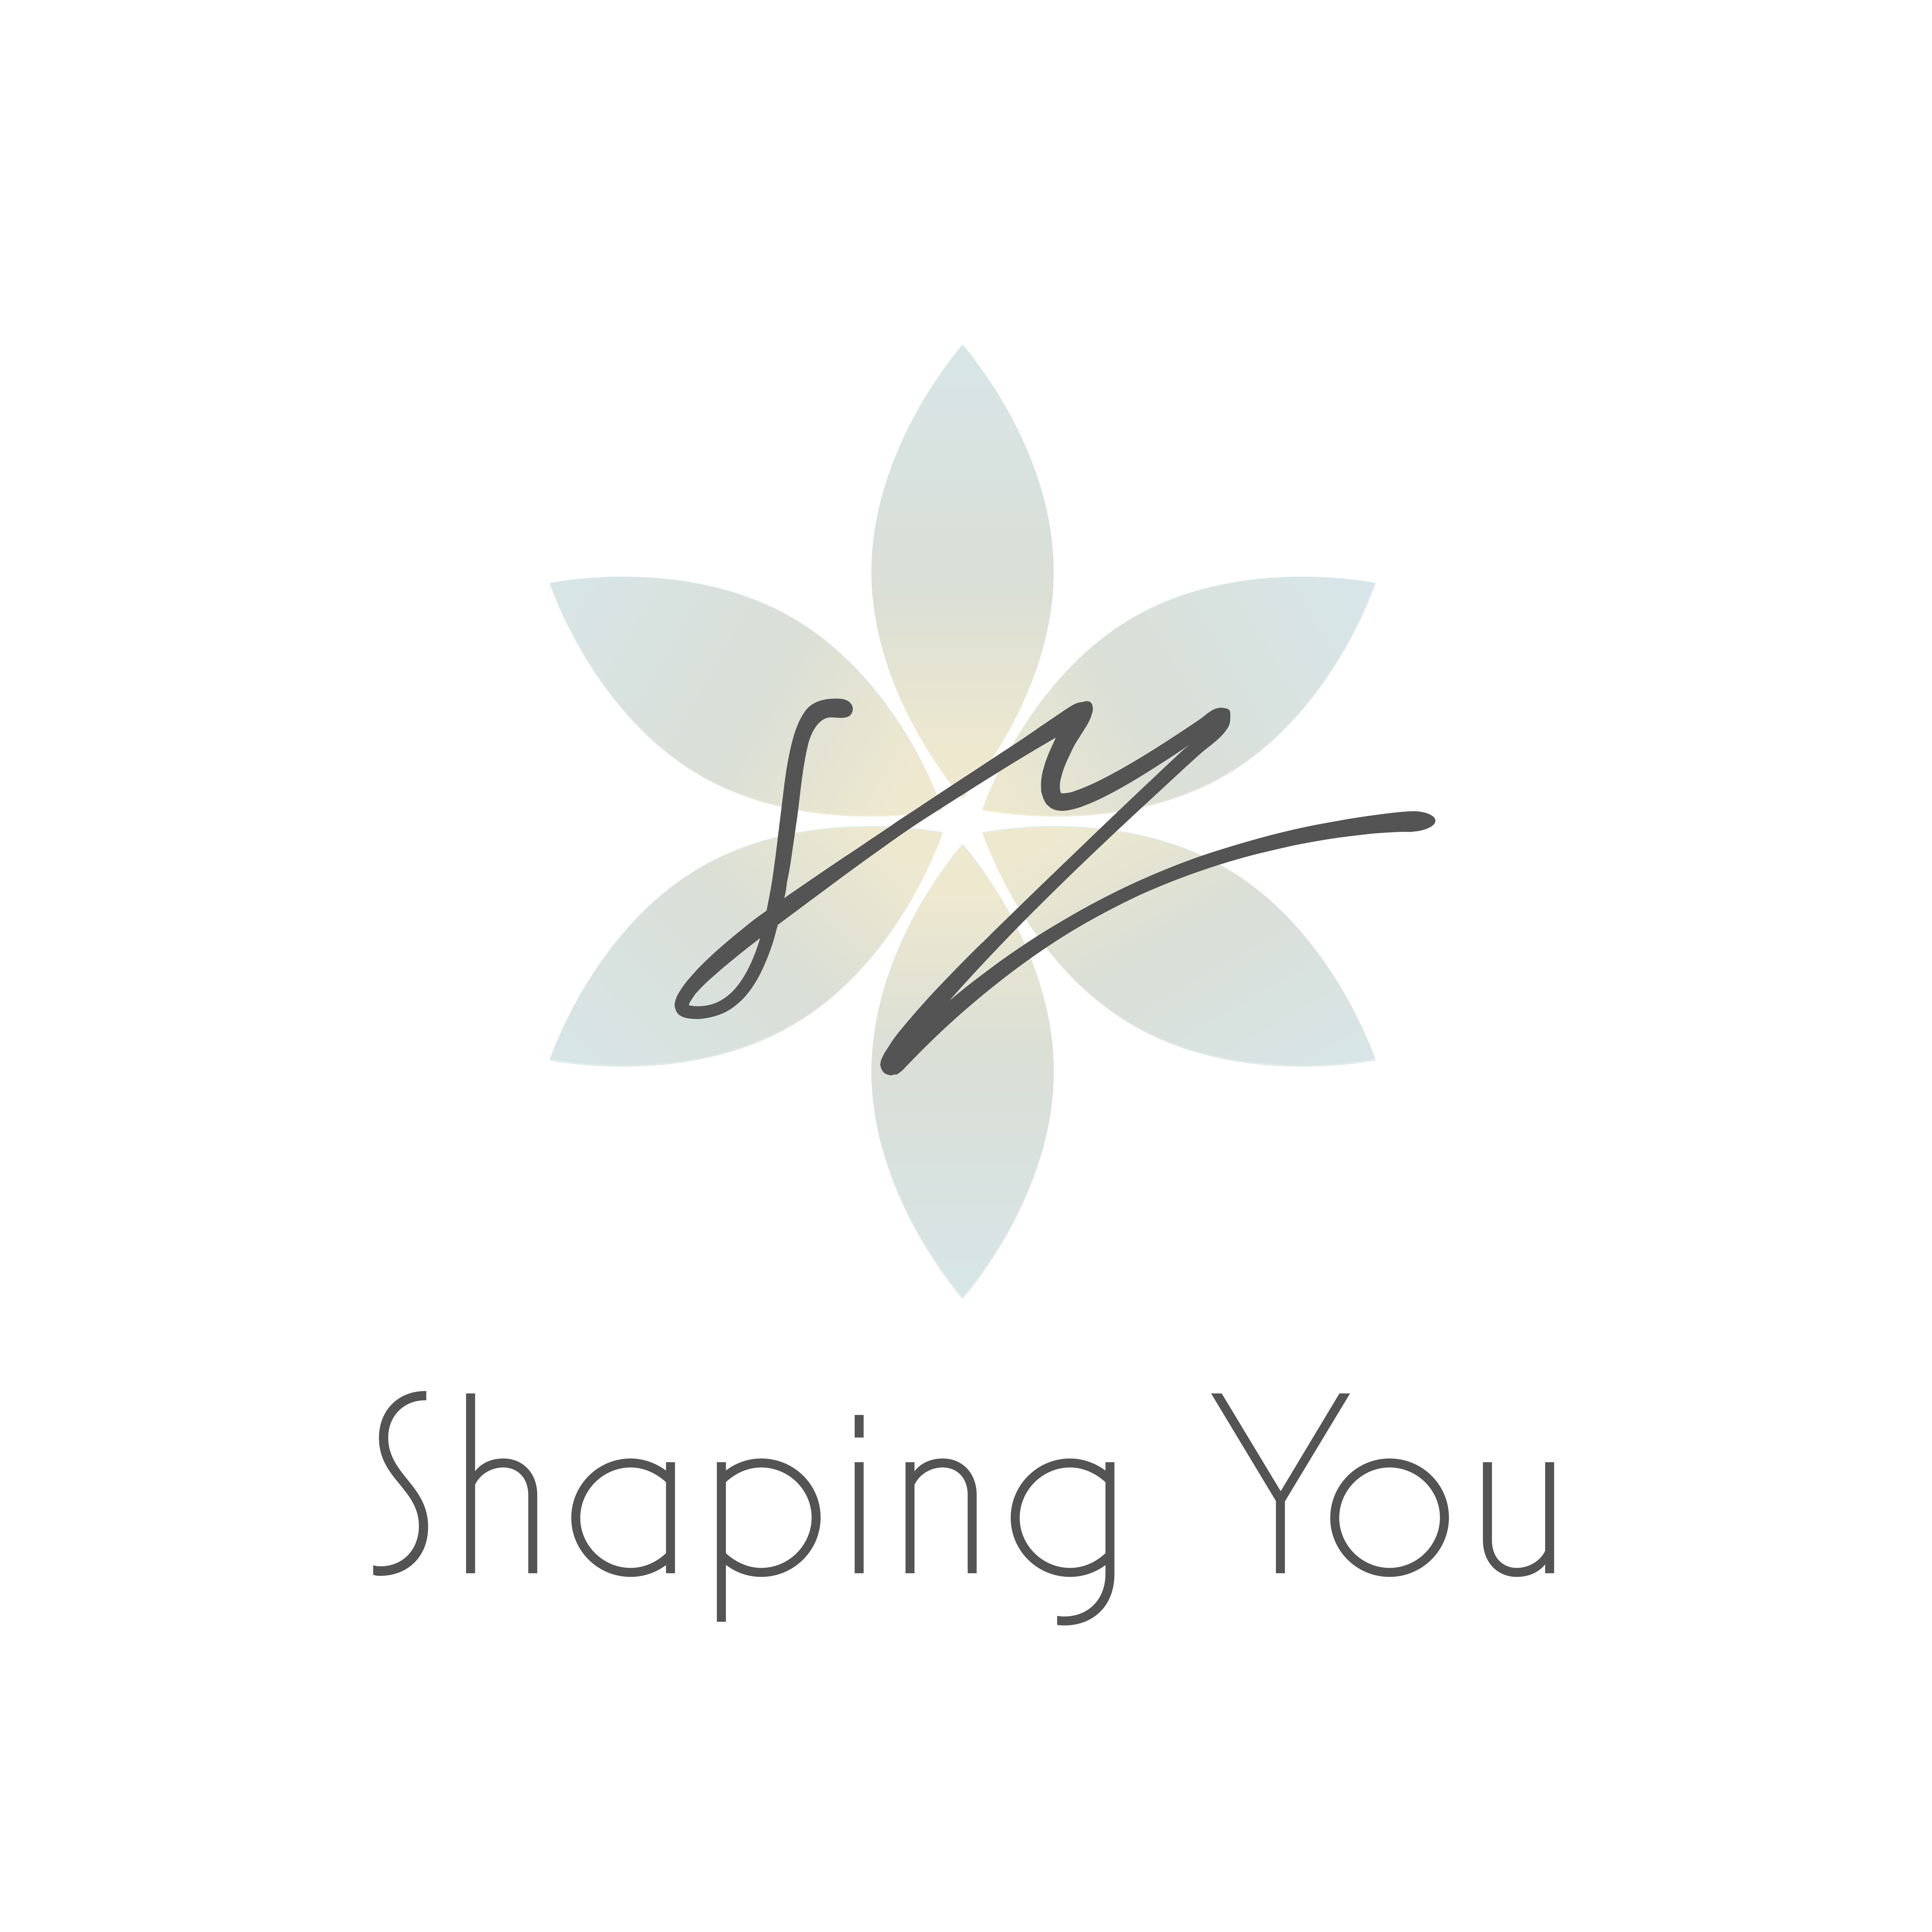 Shaping You